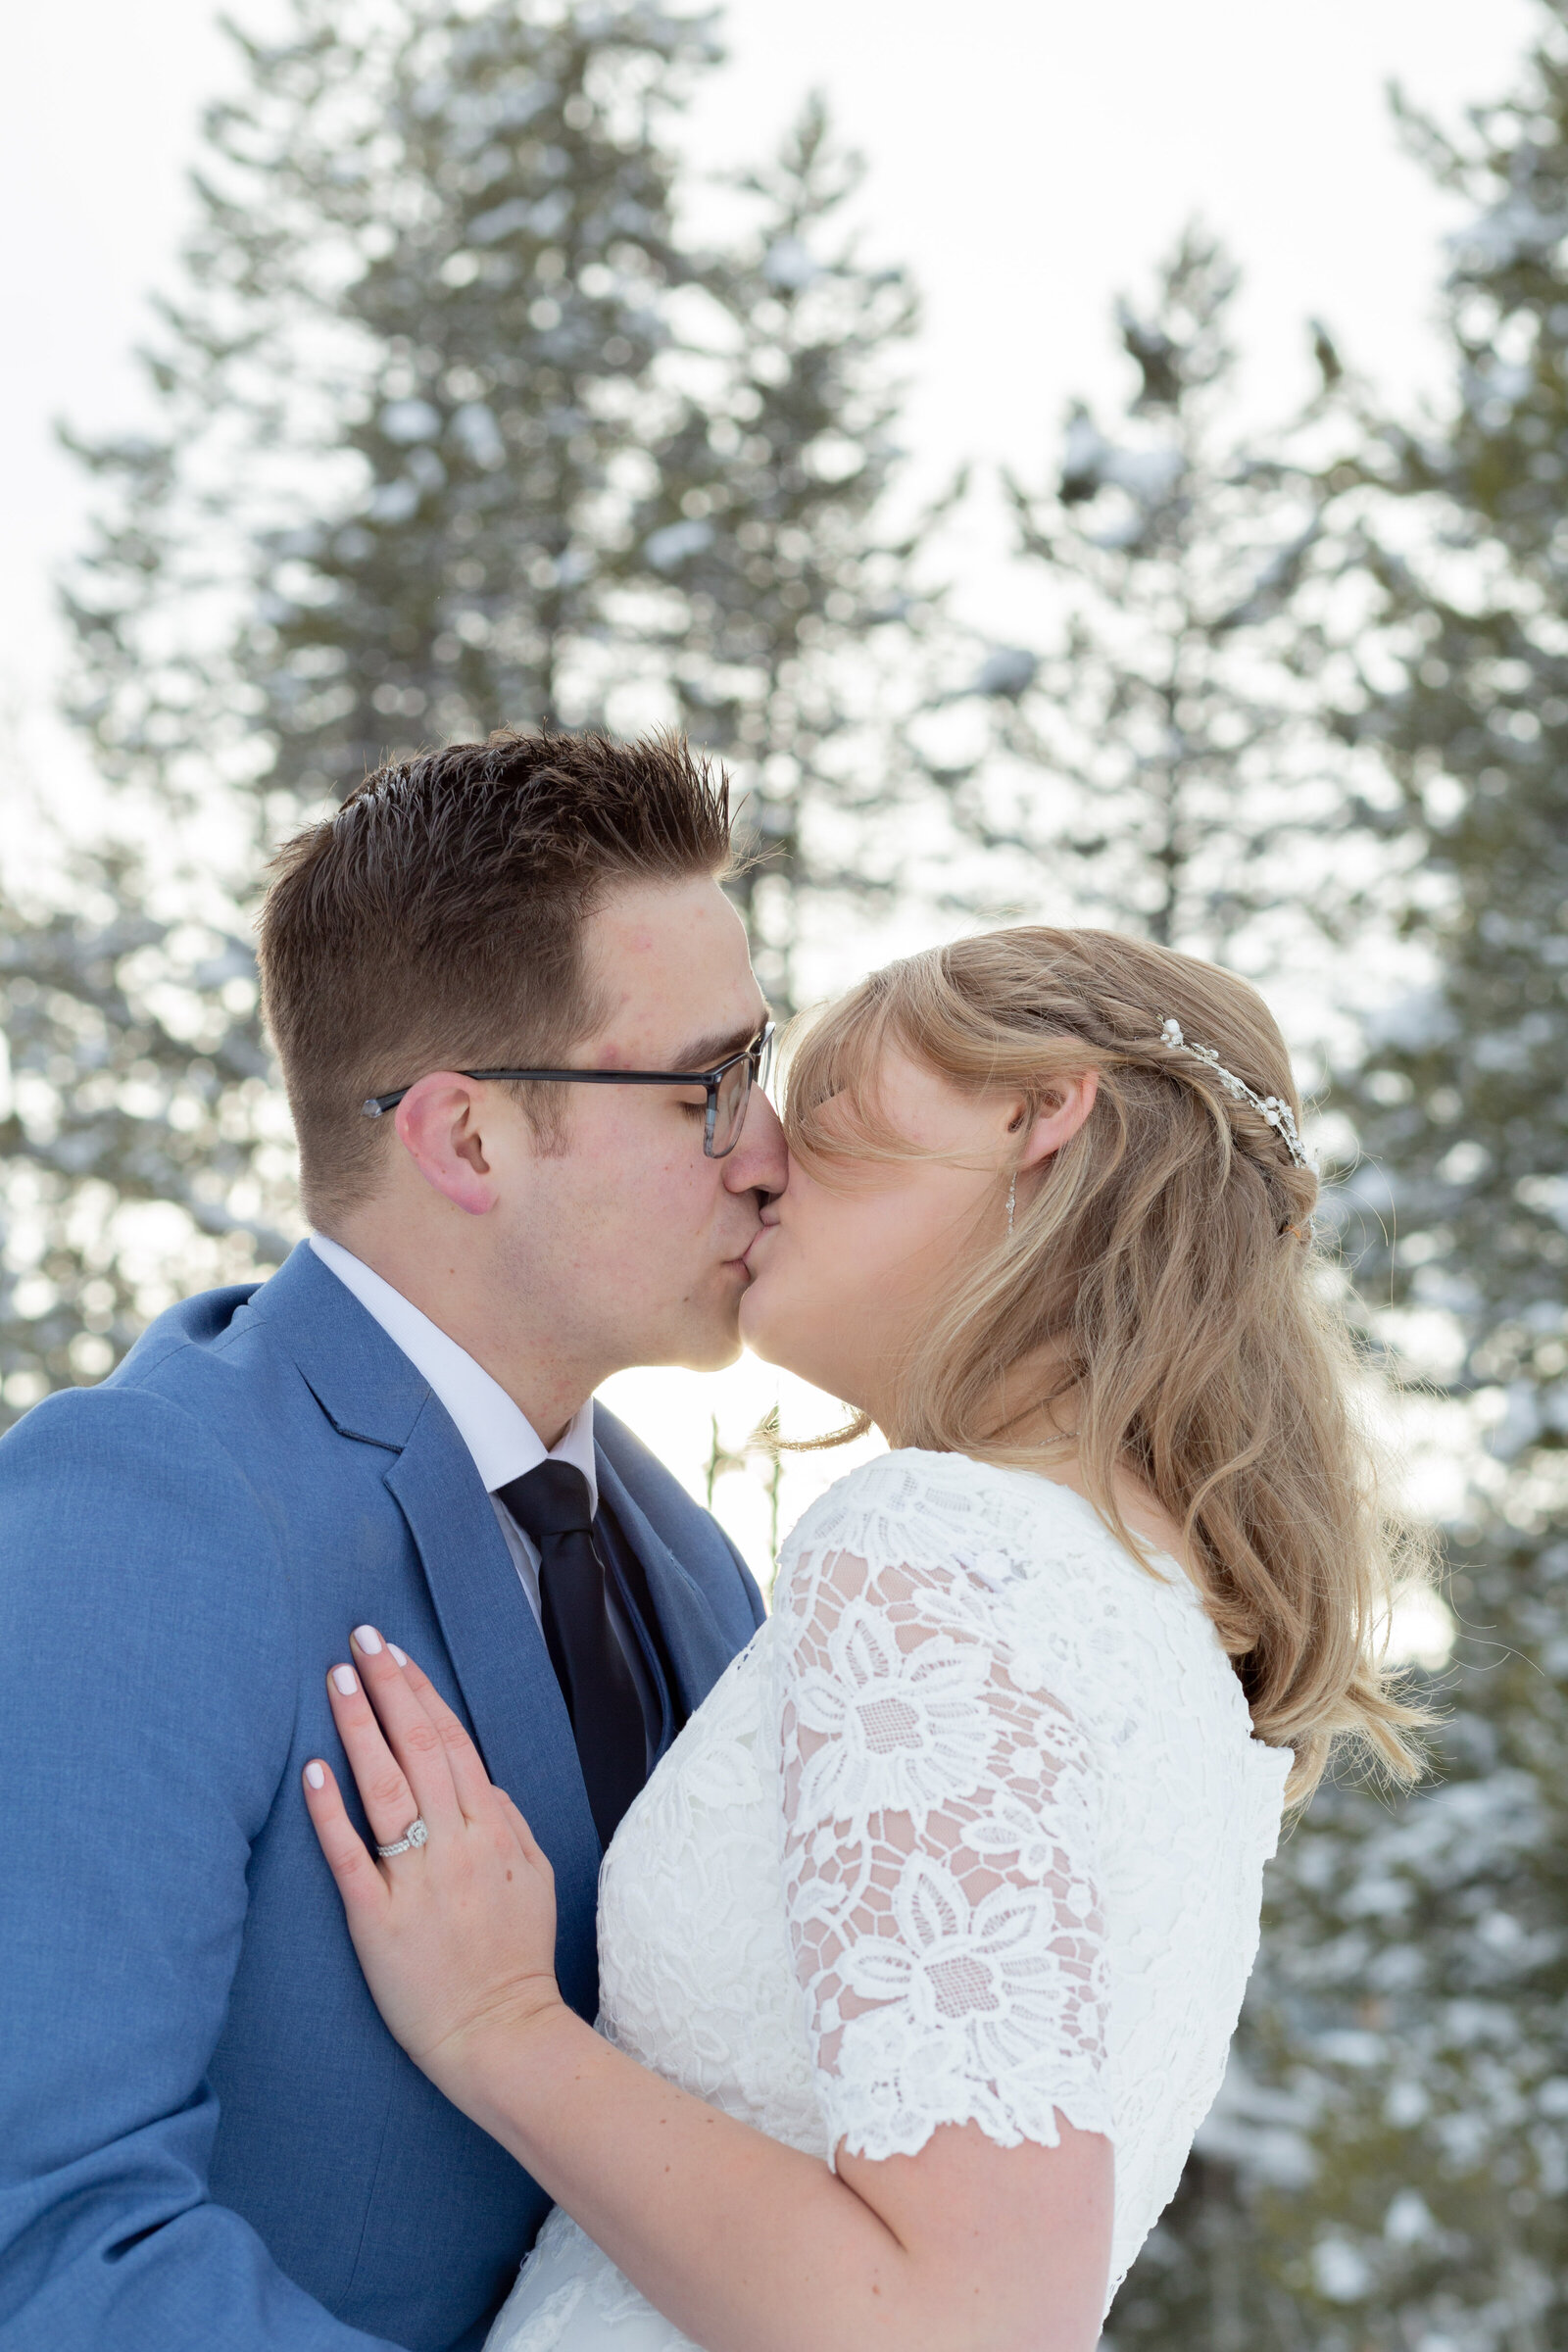 Idaho wedding photographer captures couple kissing during spring wedding